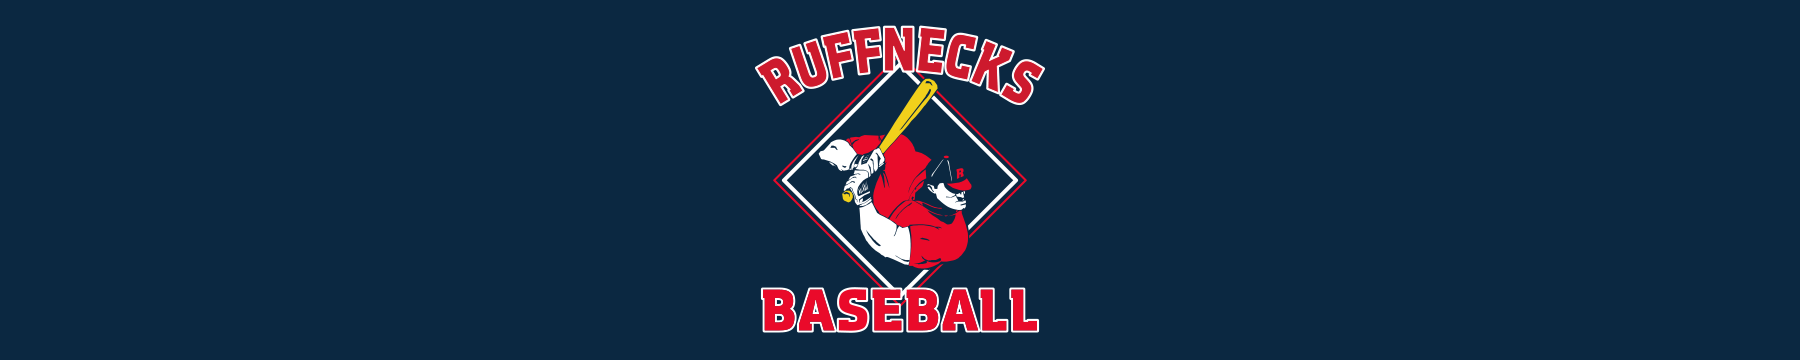 Ruffnecks Baseball